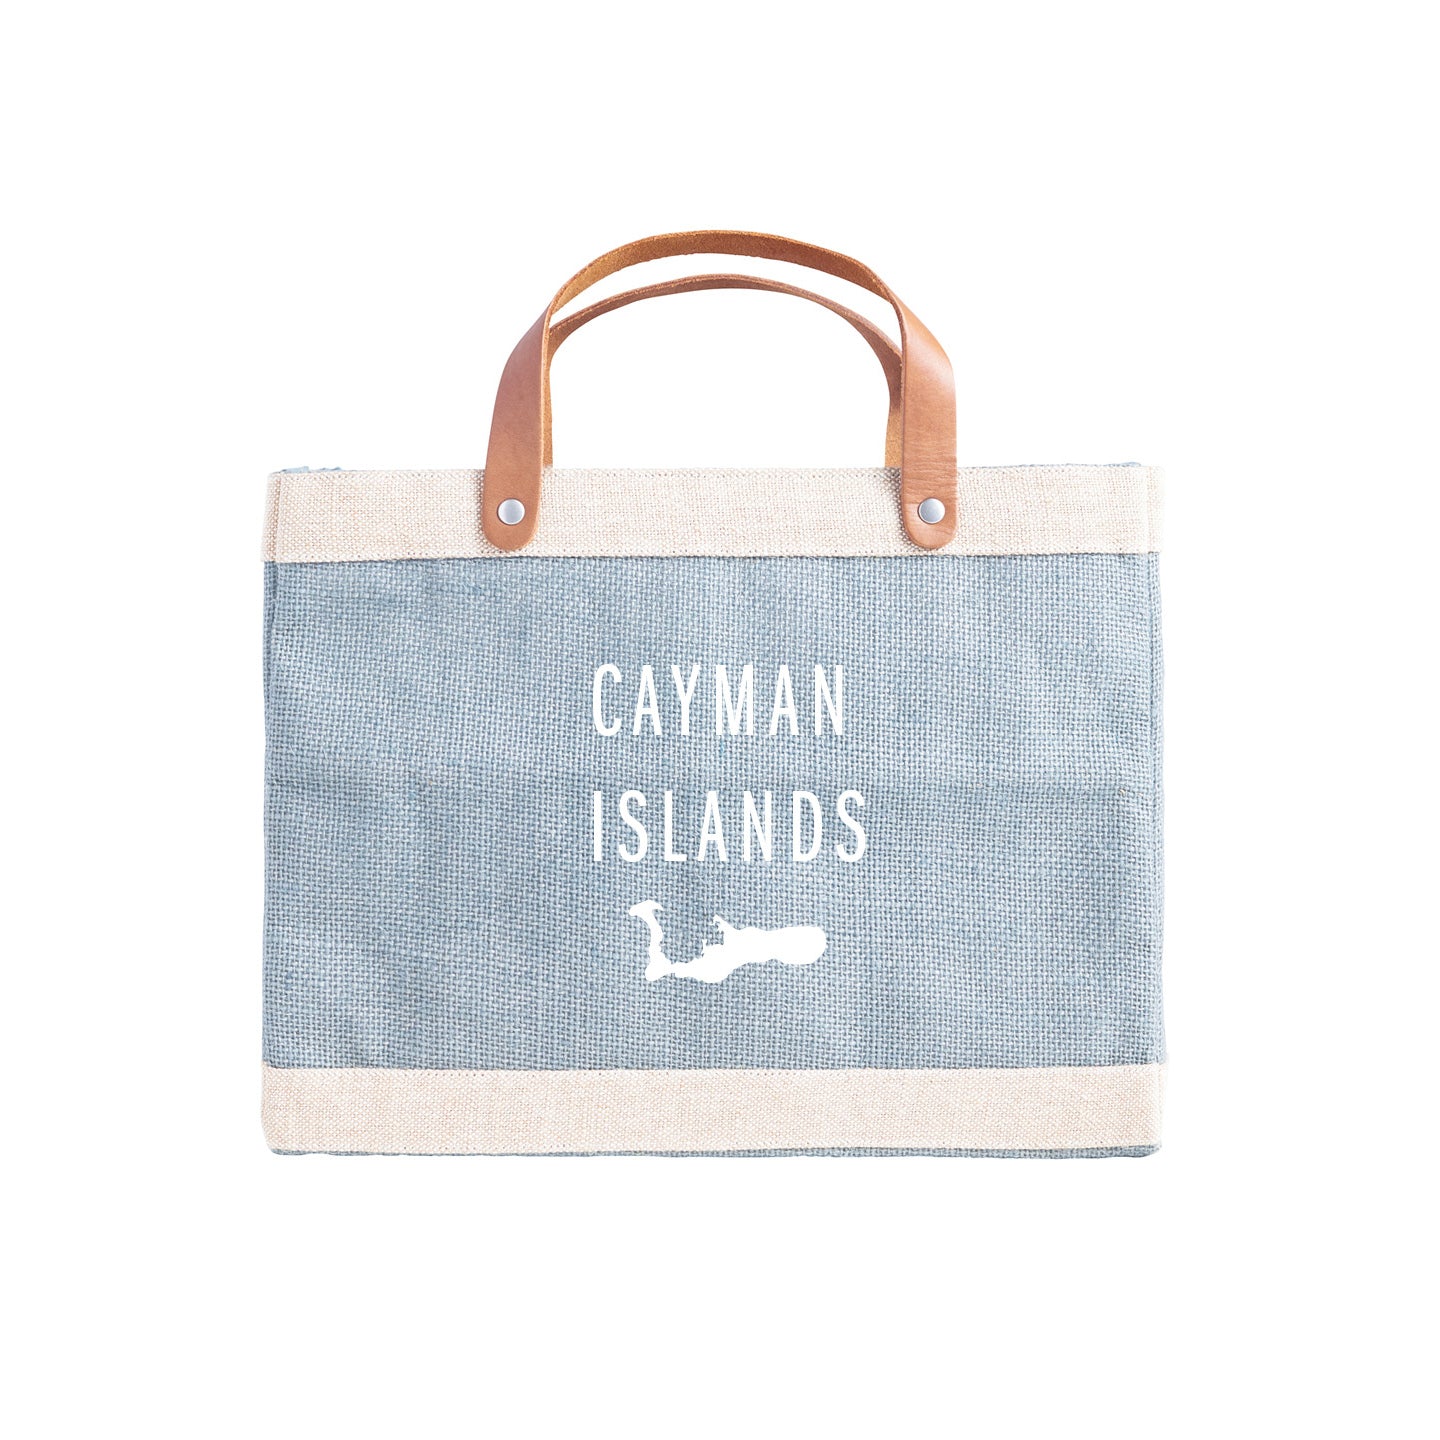 Apolis Small Market Bag - Cayman Islands